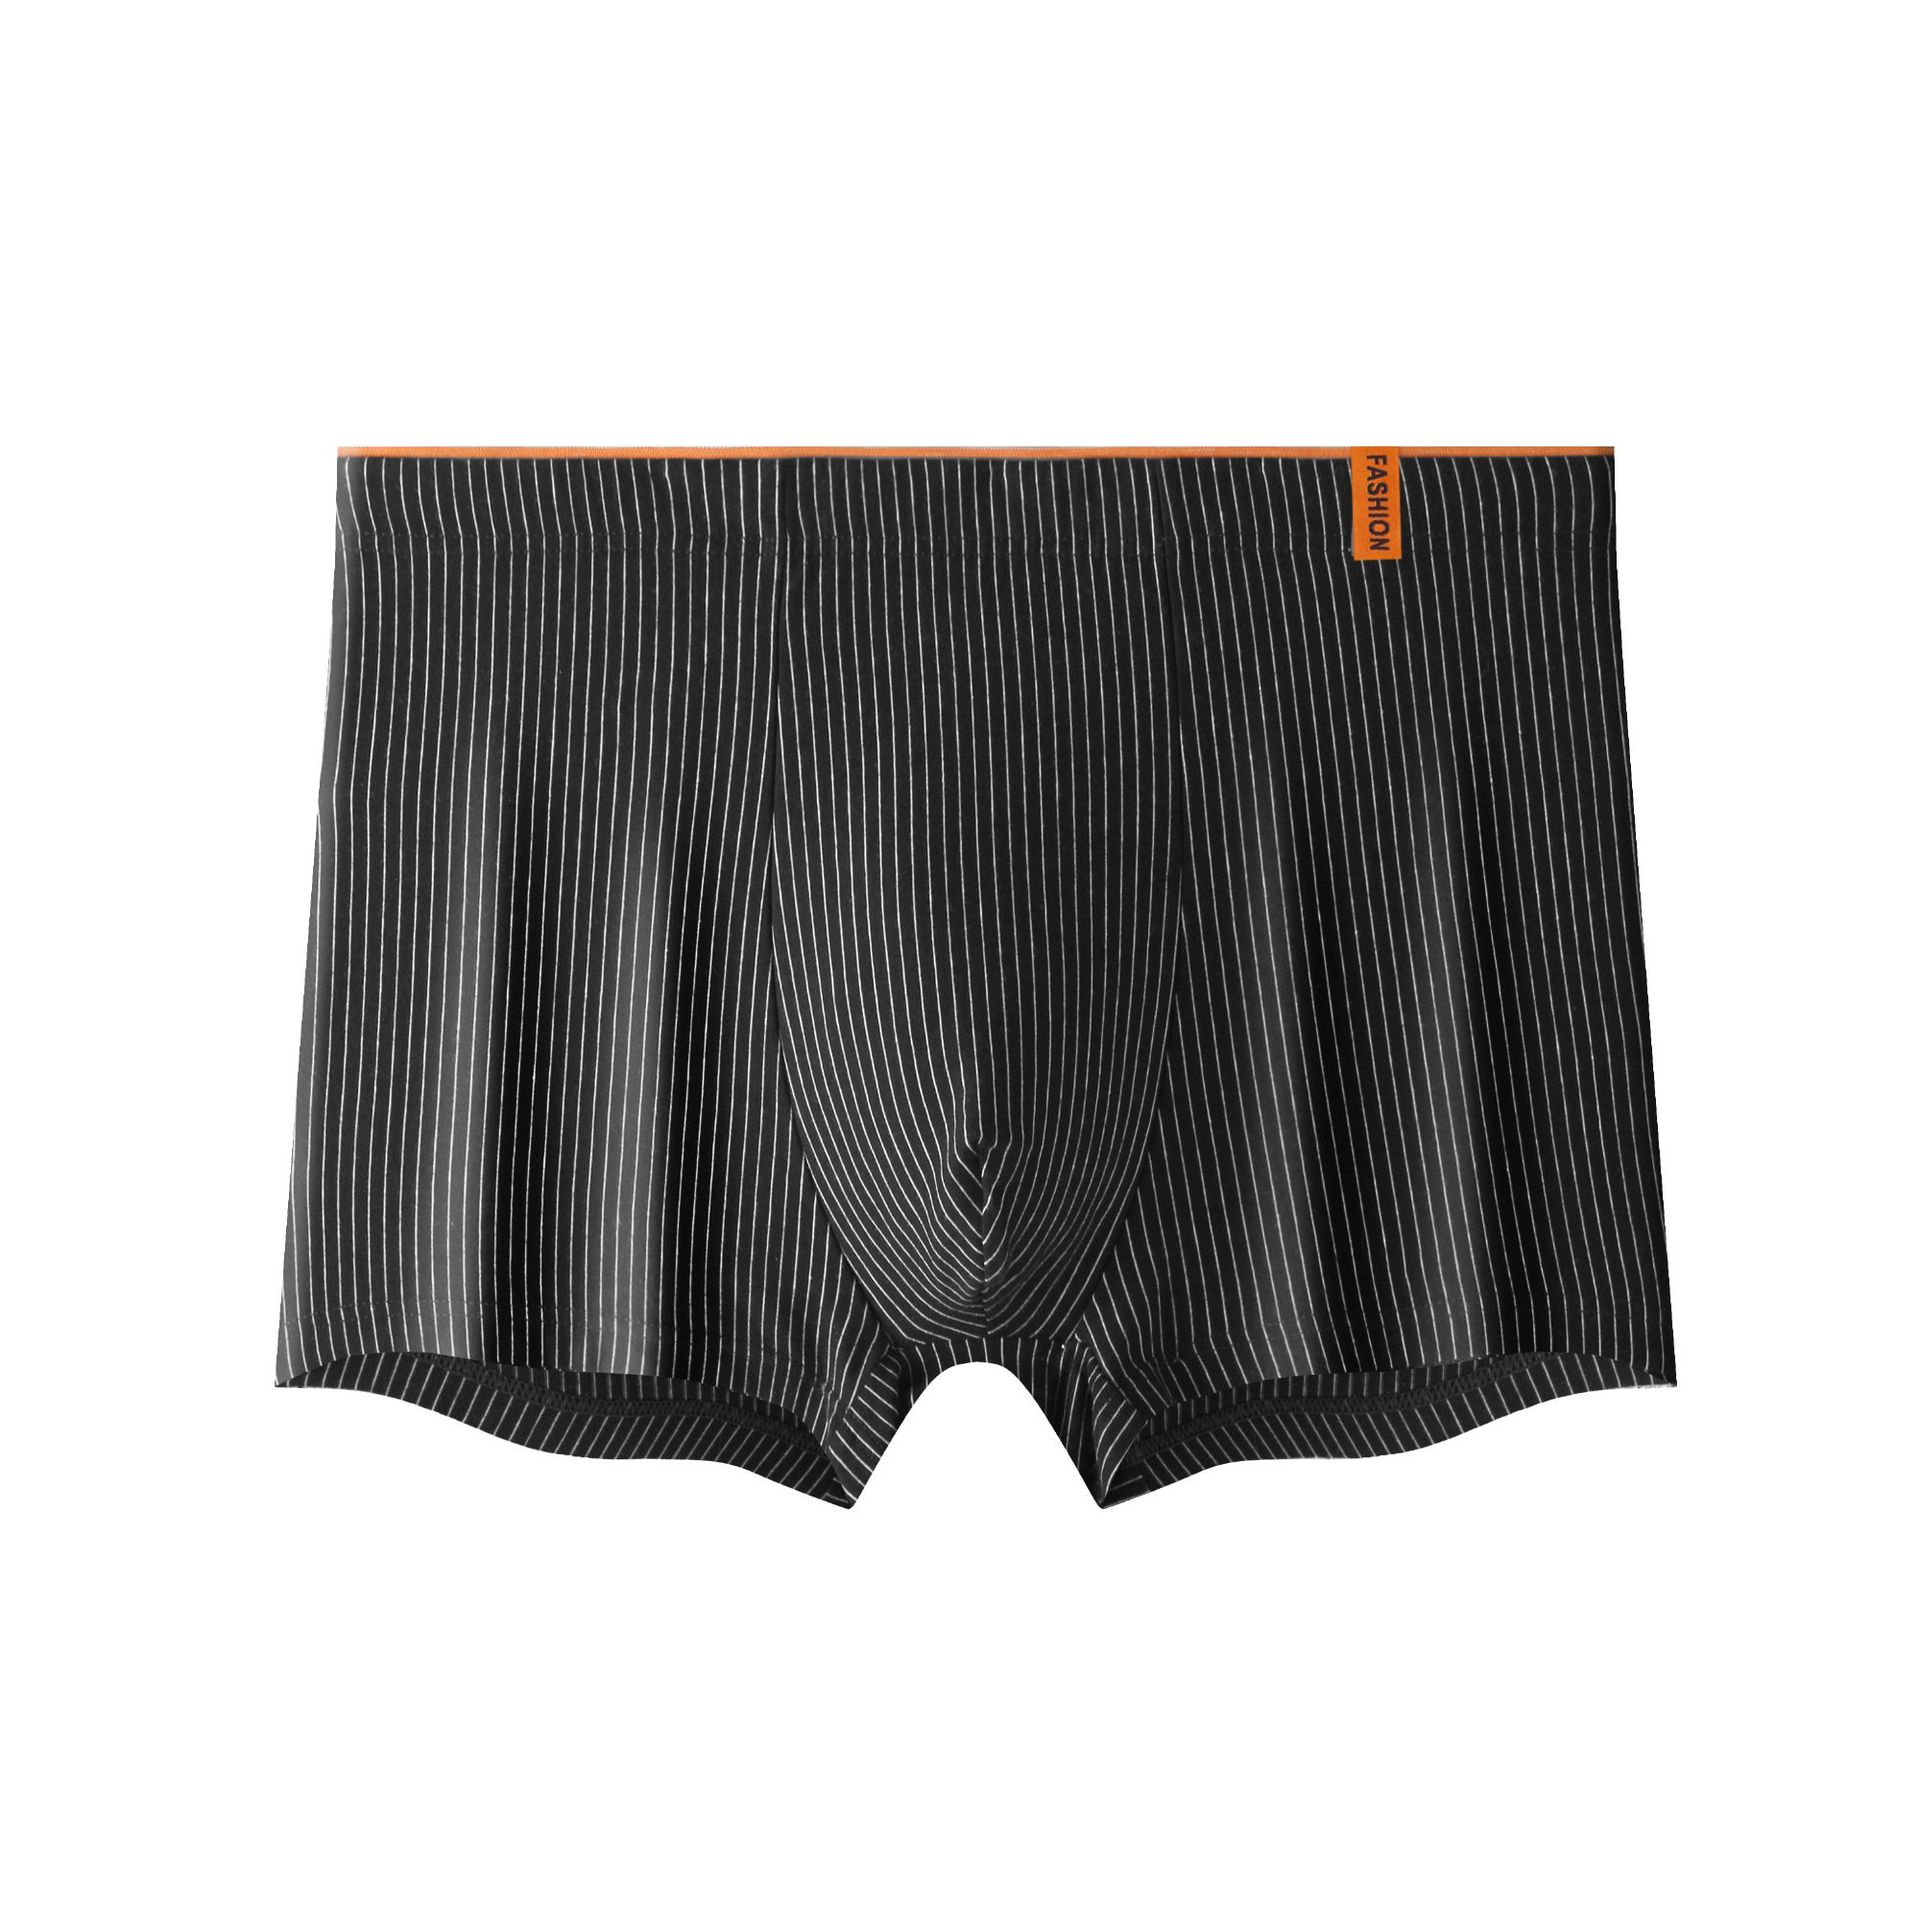 3 Pieces Of Men's Stripes Cotton Mid-Waist Comfortable Breathable High Elastic Underwear Briefs